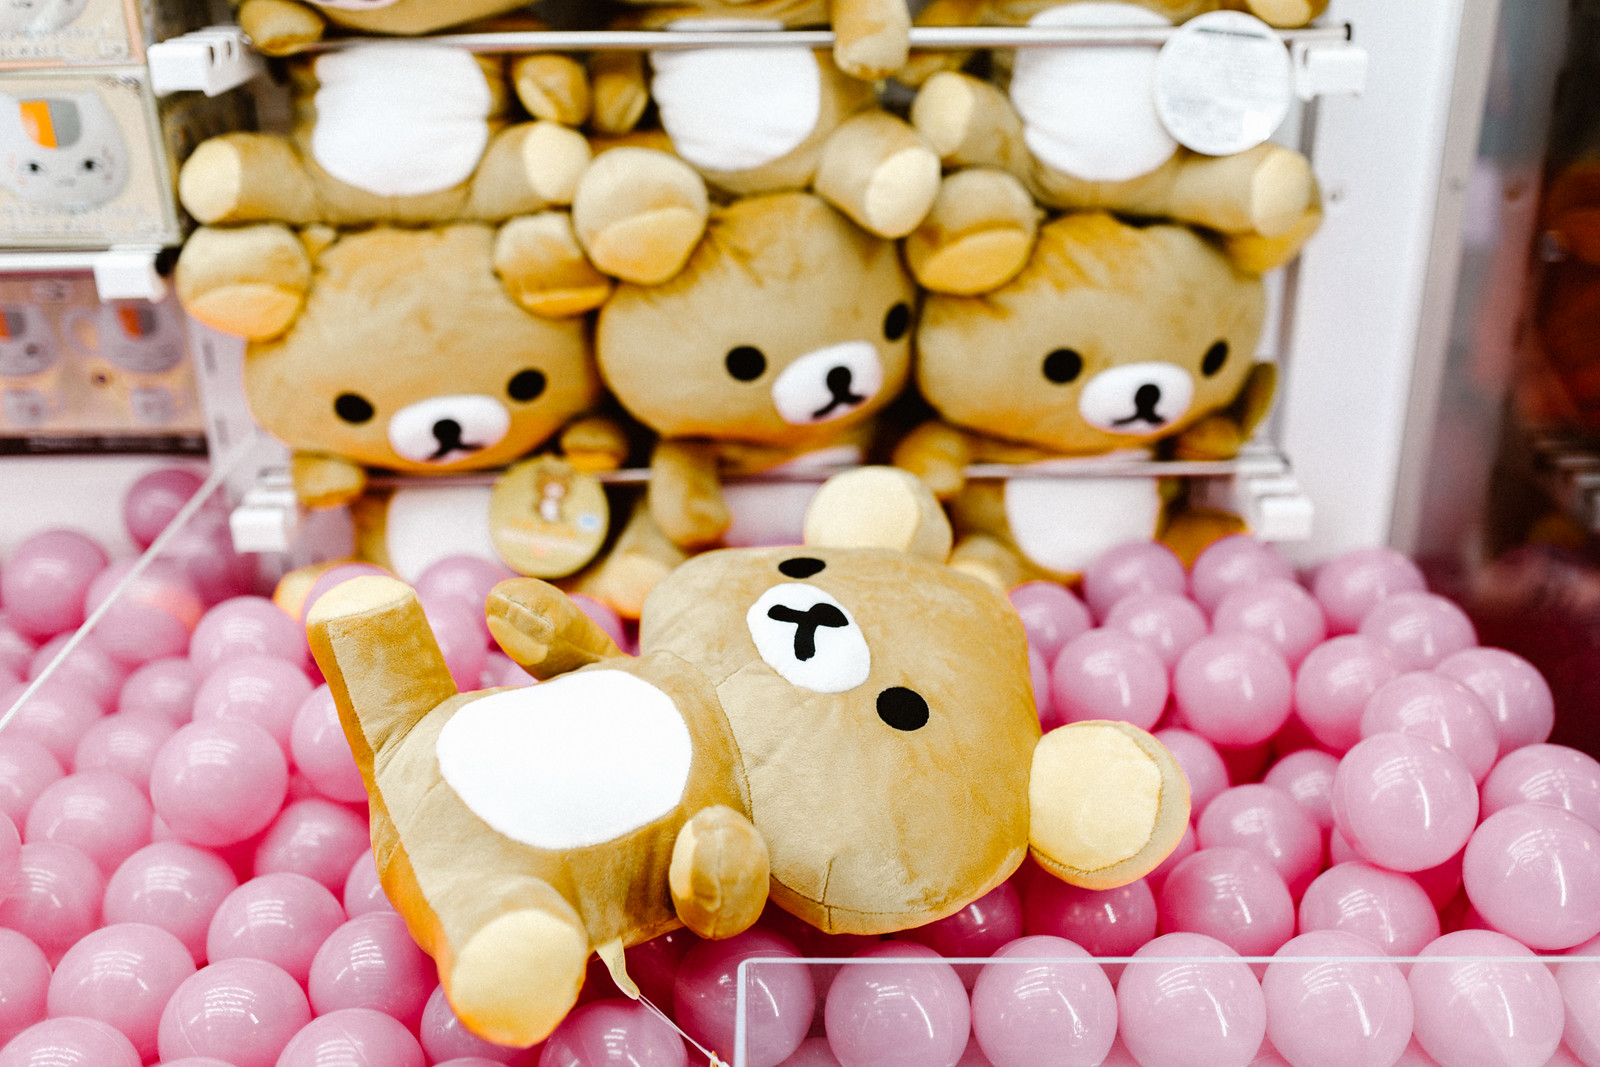 Cute Pusheen and Hello Kitty stuffed animals in Akihabara Japanese Arcade